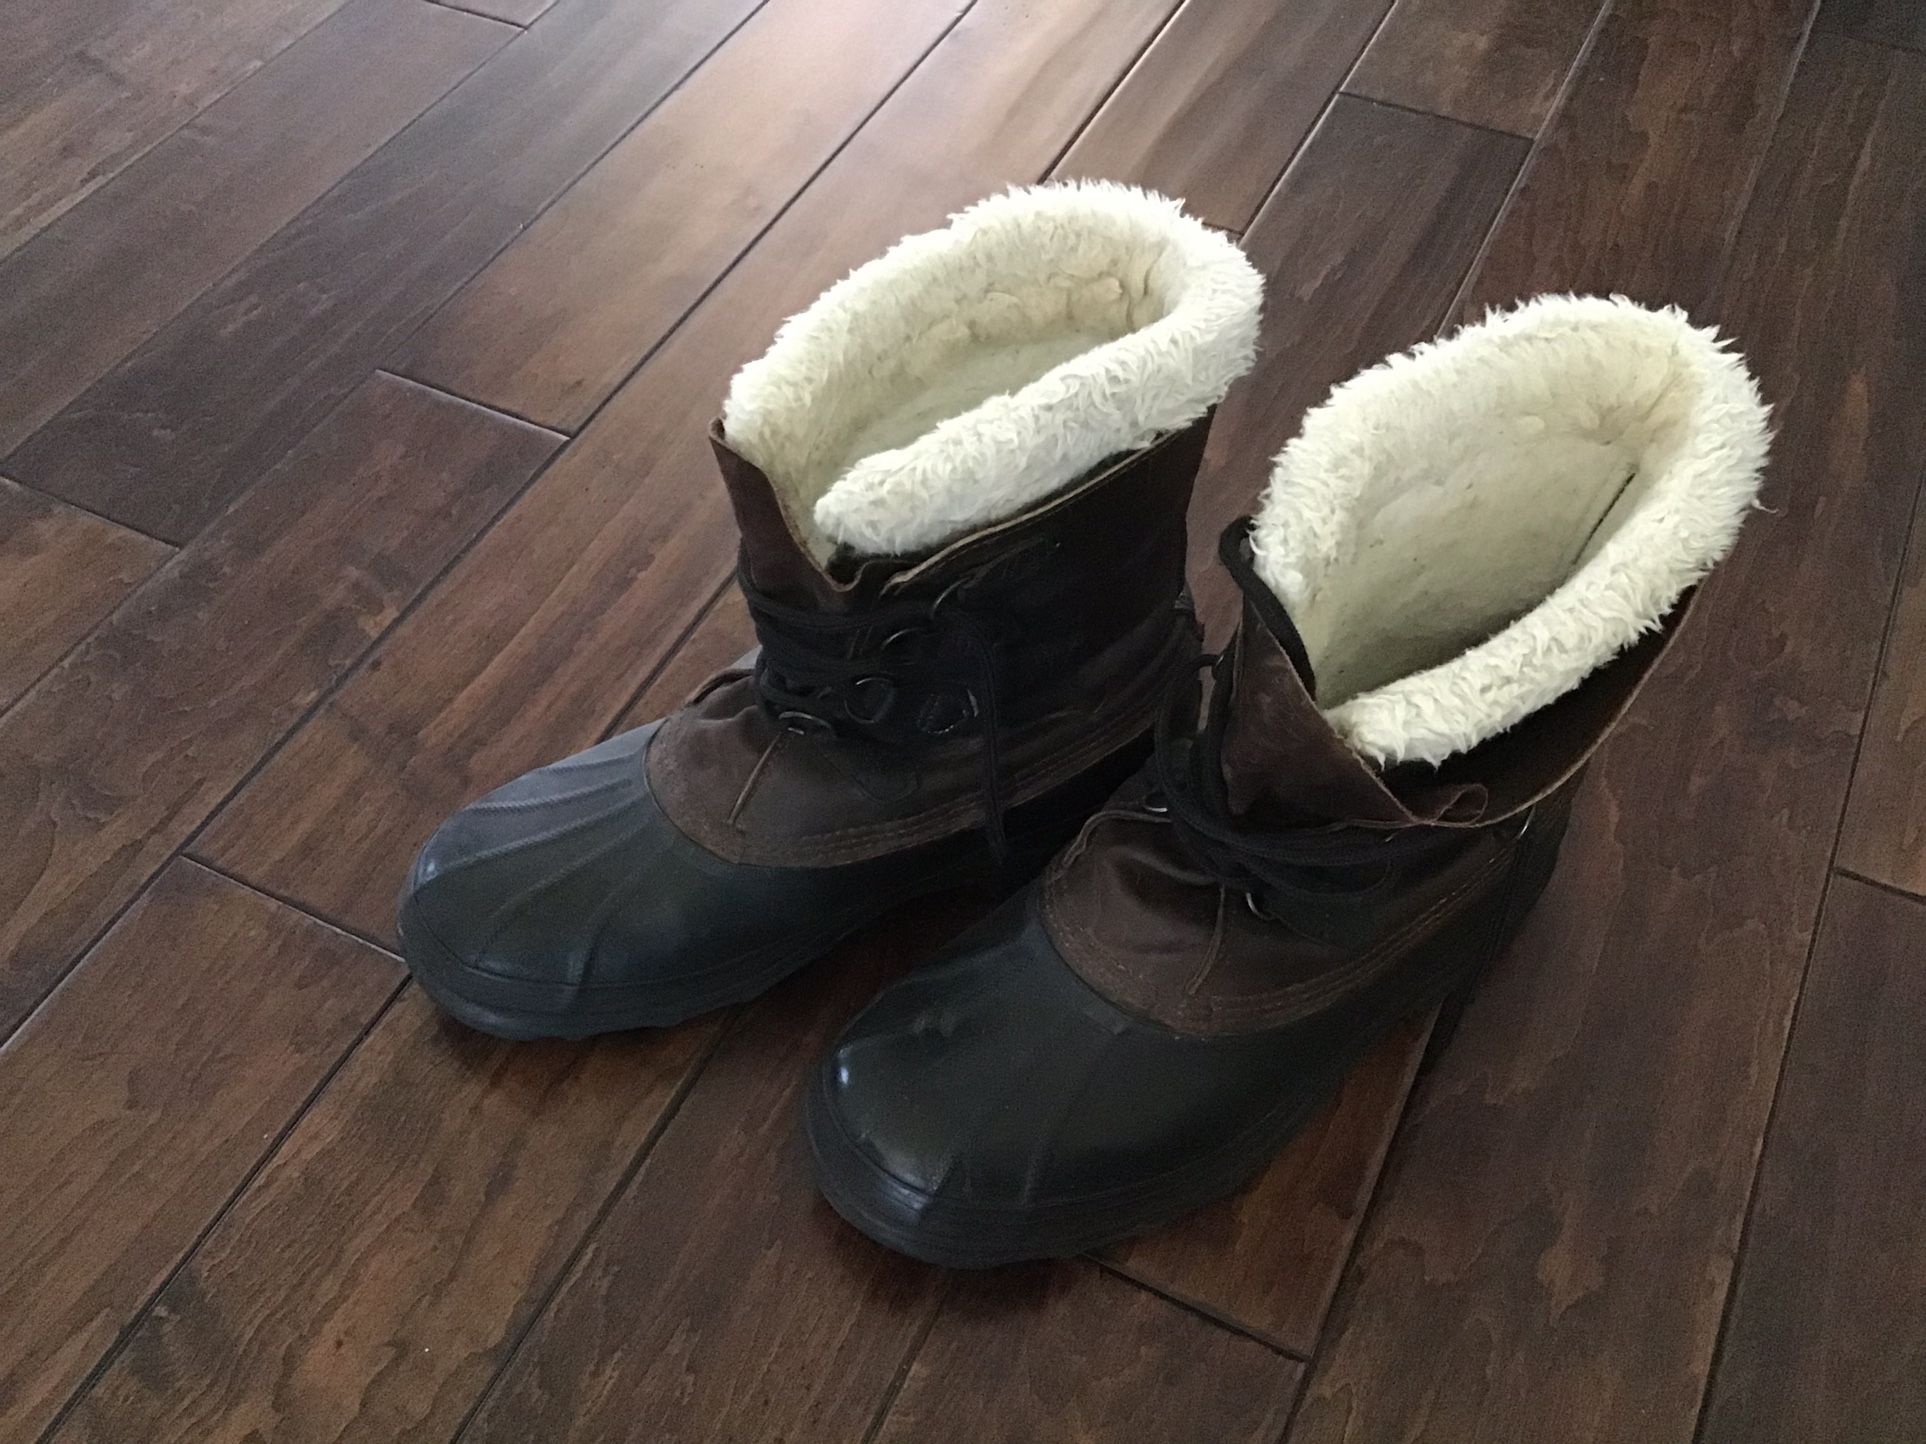 Men’s Size 13 Sorel Winter Snow boots